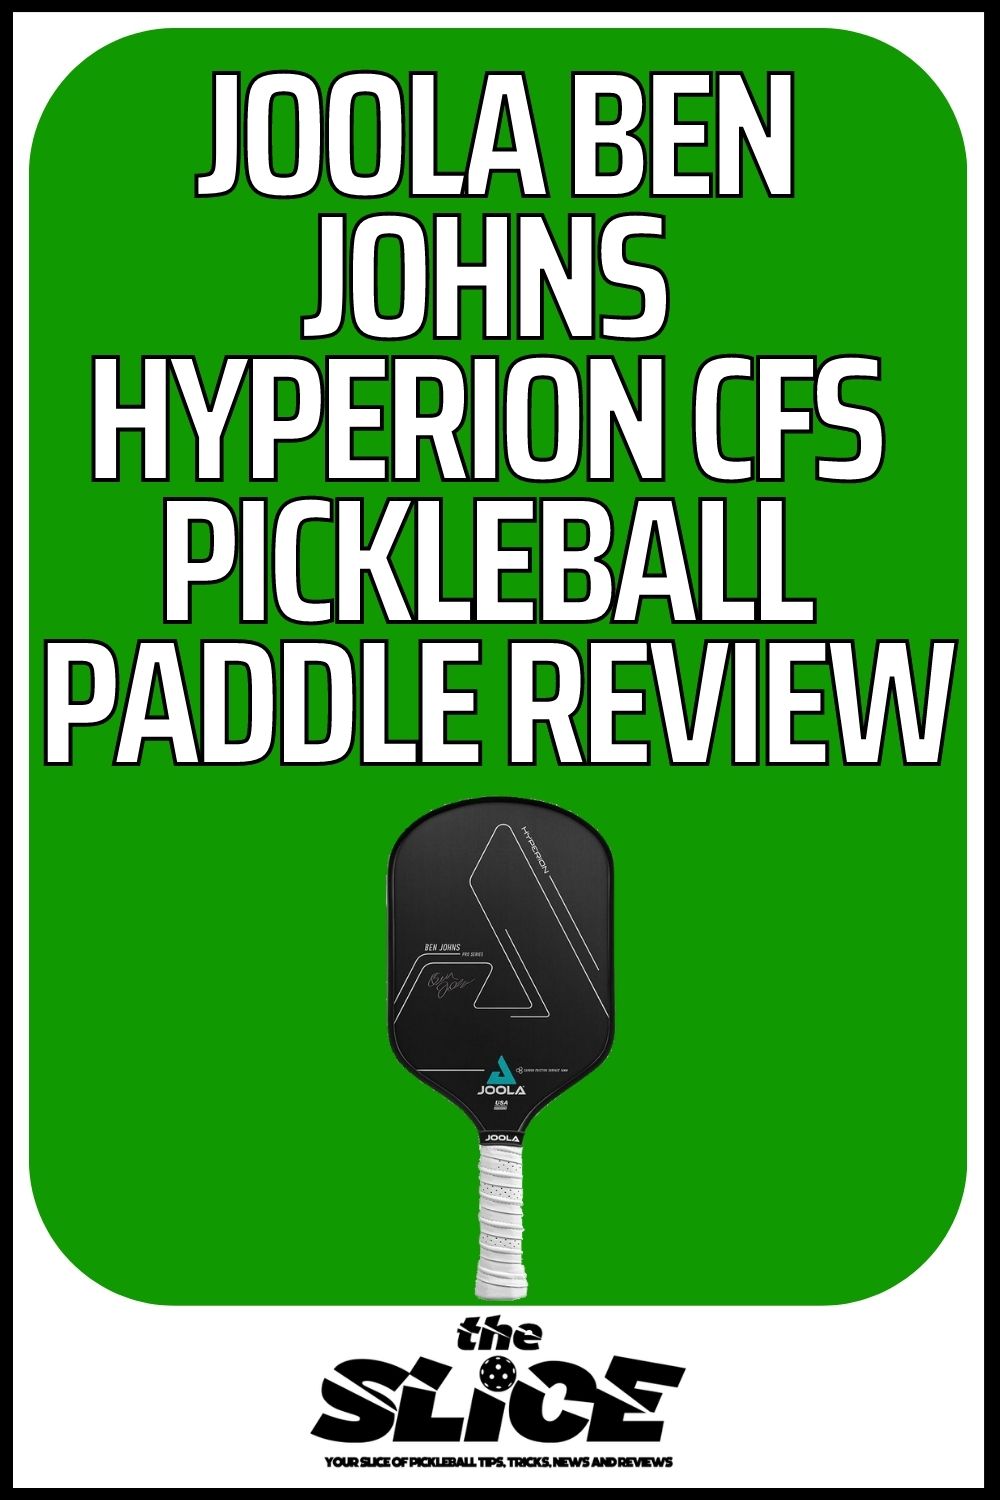 JOOLA Ben Johns Hyperion CFS Pickleball Paddle Review (1)